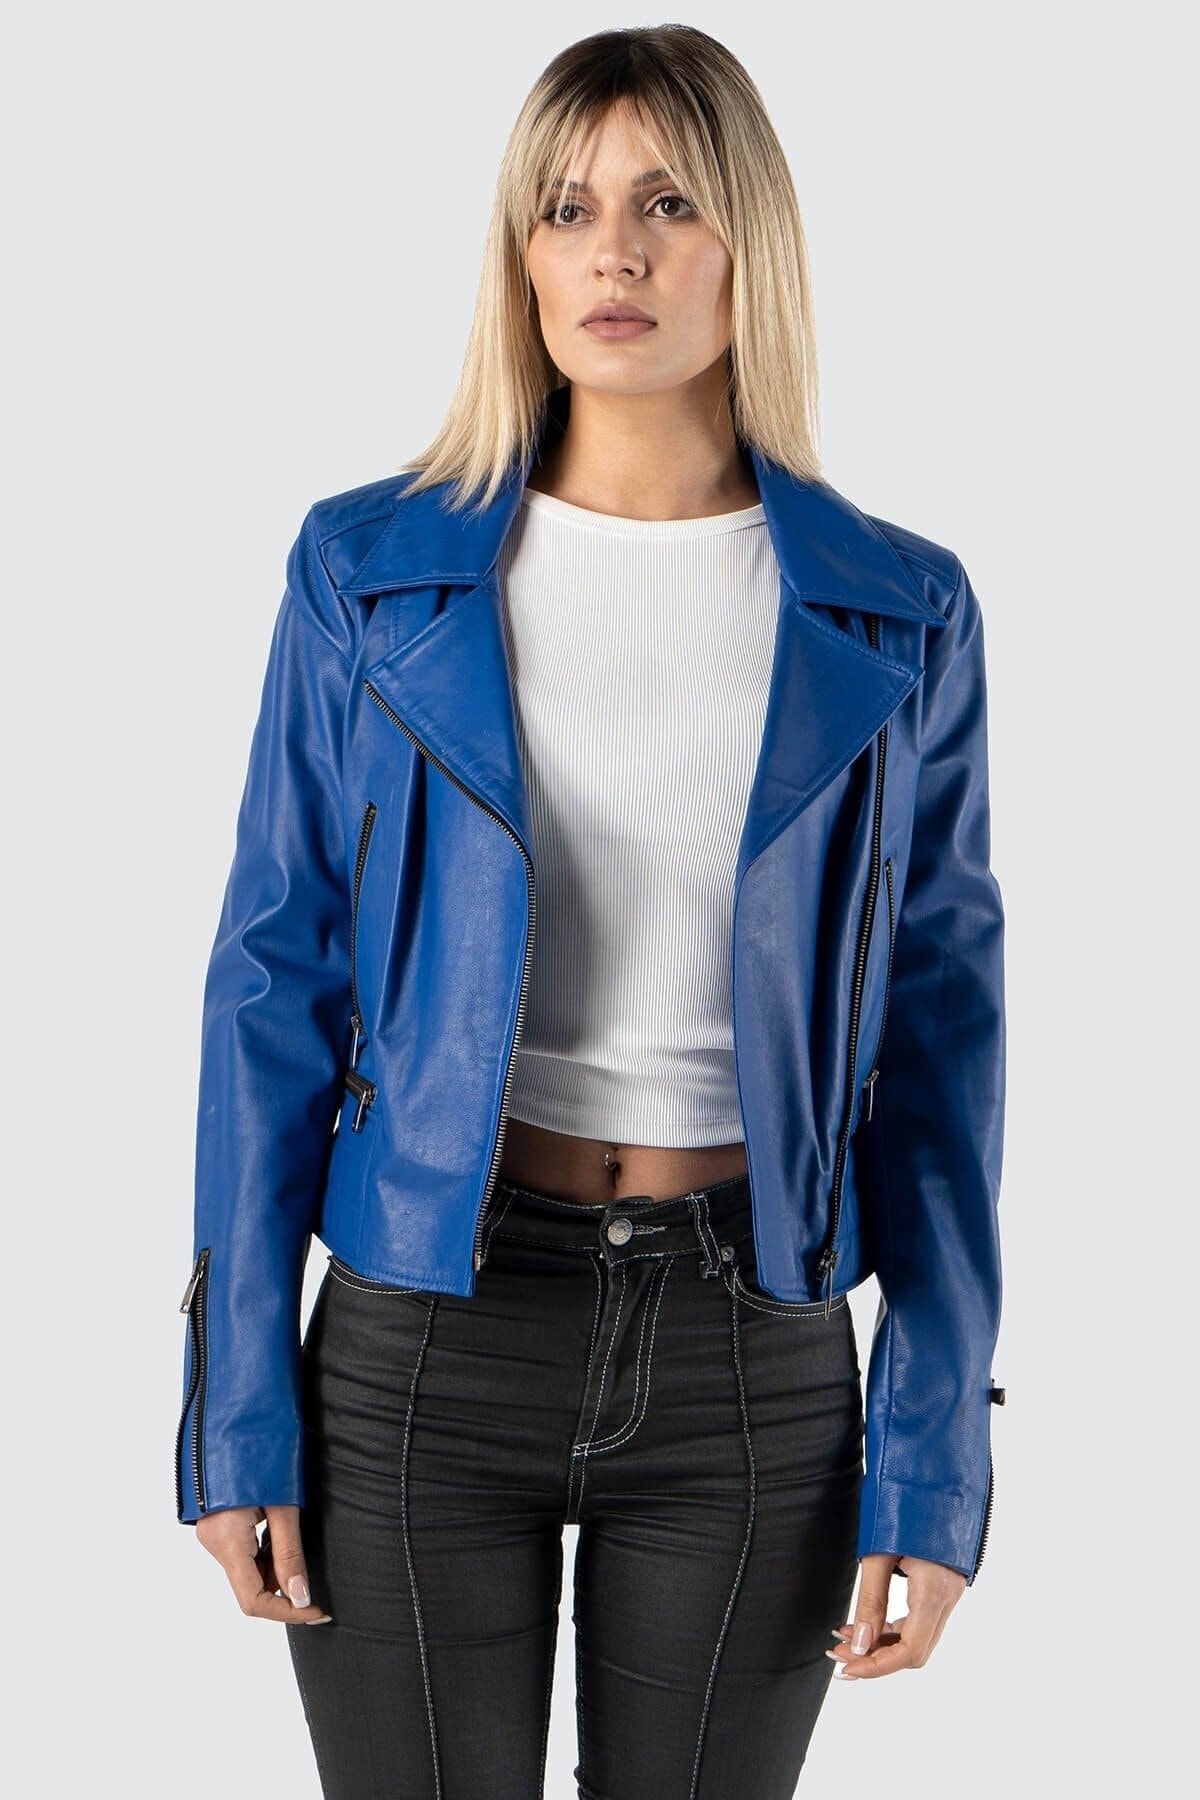 Deriza Karina Kadın Hakiki Deri Mavi Ceket